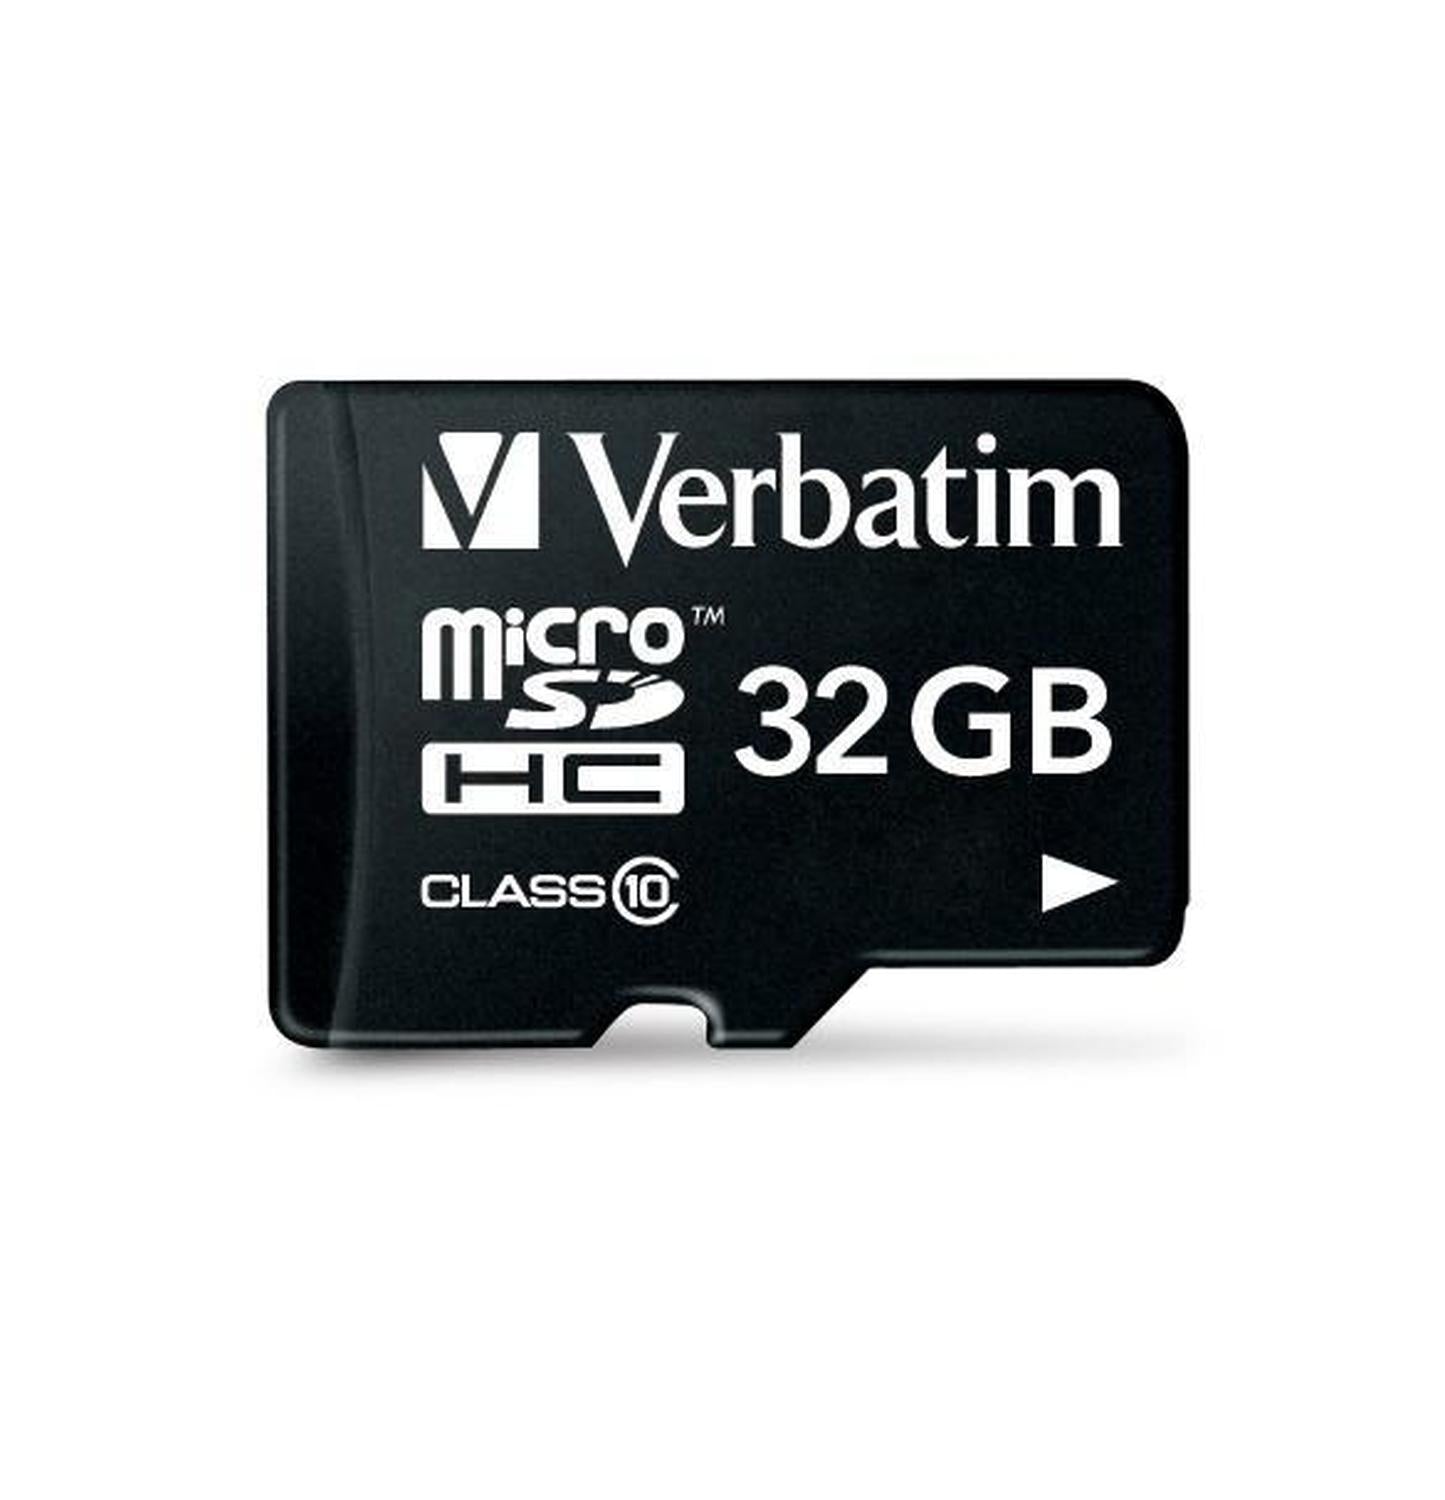 Memoria Flash Verbatim, 32GB microSDHC Clase 10, con Adaptador